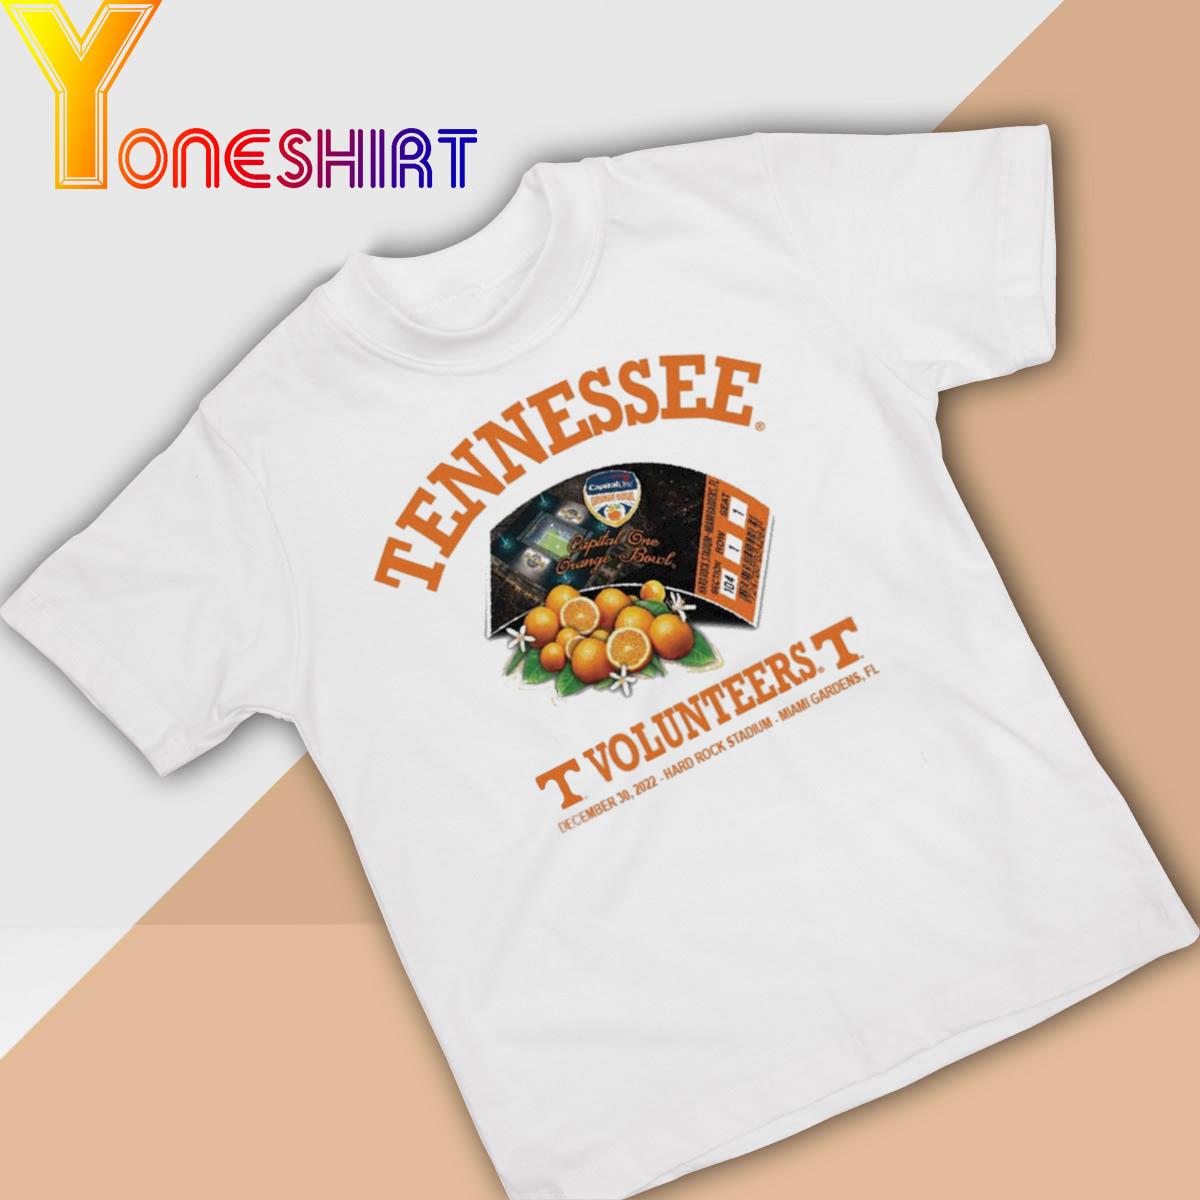 Tennessee Volunteers Hard Rock Stadium 2022 shirt